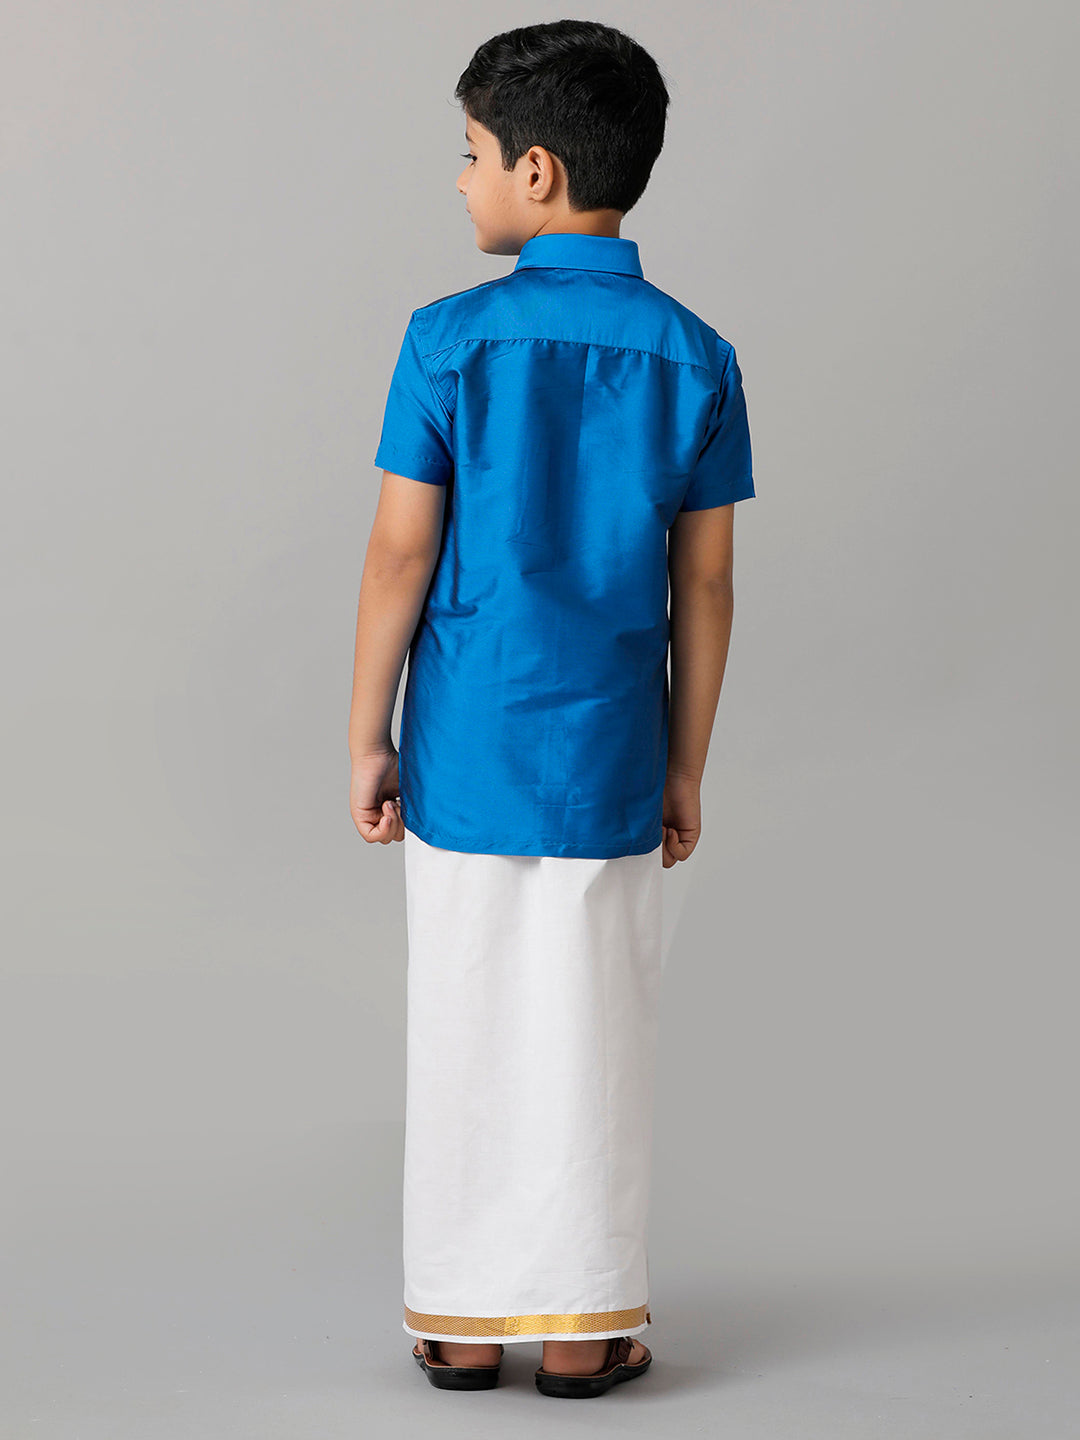 Boys Silk Cotton Royal Blue Half Sleeves Shirt with Adjustable White Dhoti Combo K10-Back view